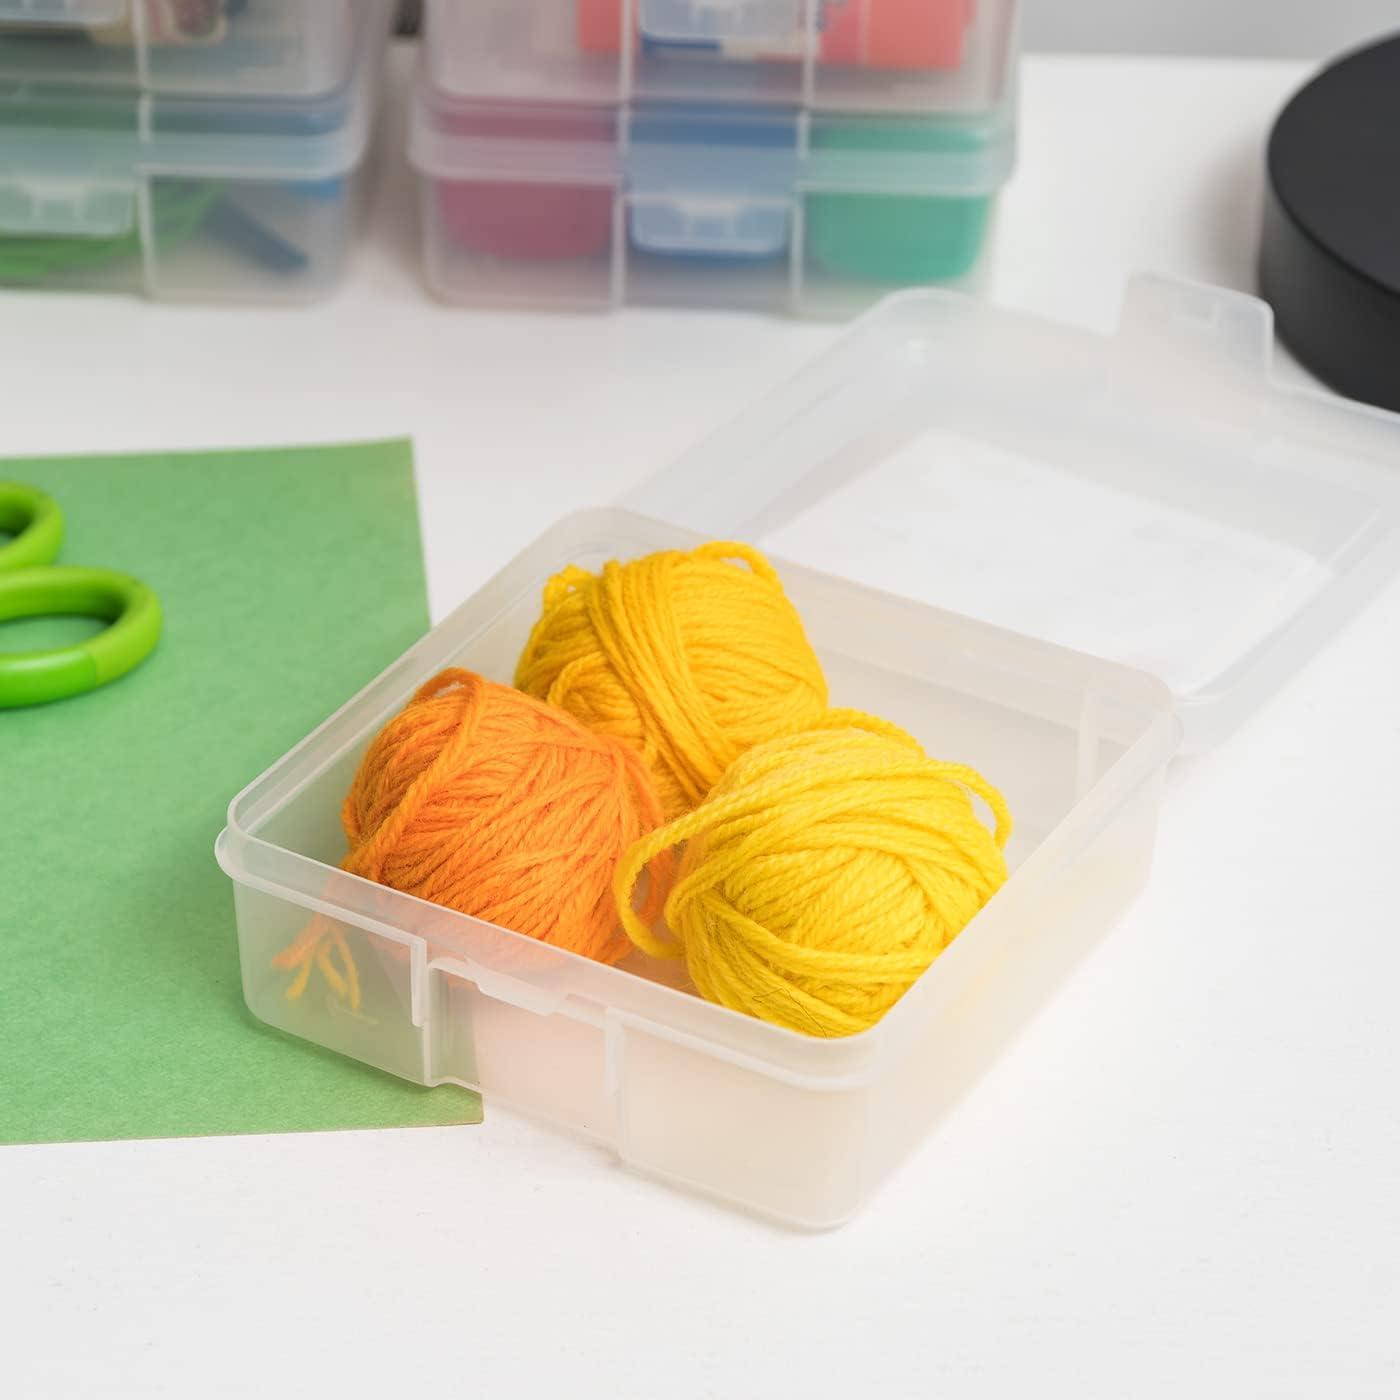  EnviUs SnapCube - Snap & Stackable Storage Case for Rainbow Loom  + Arts & Crafts (Mini, Orange)